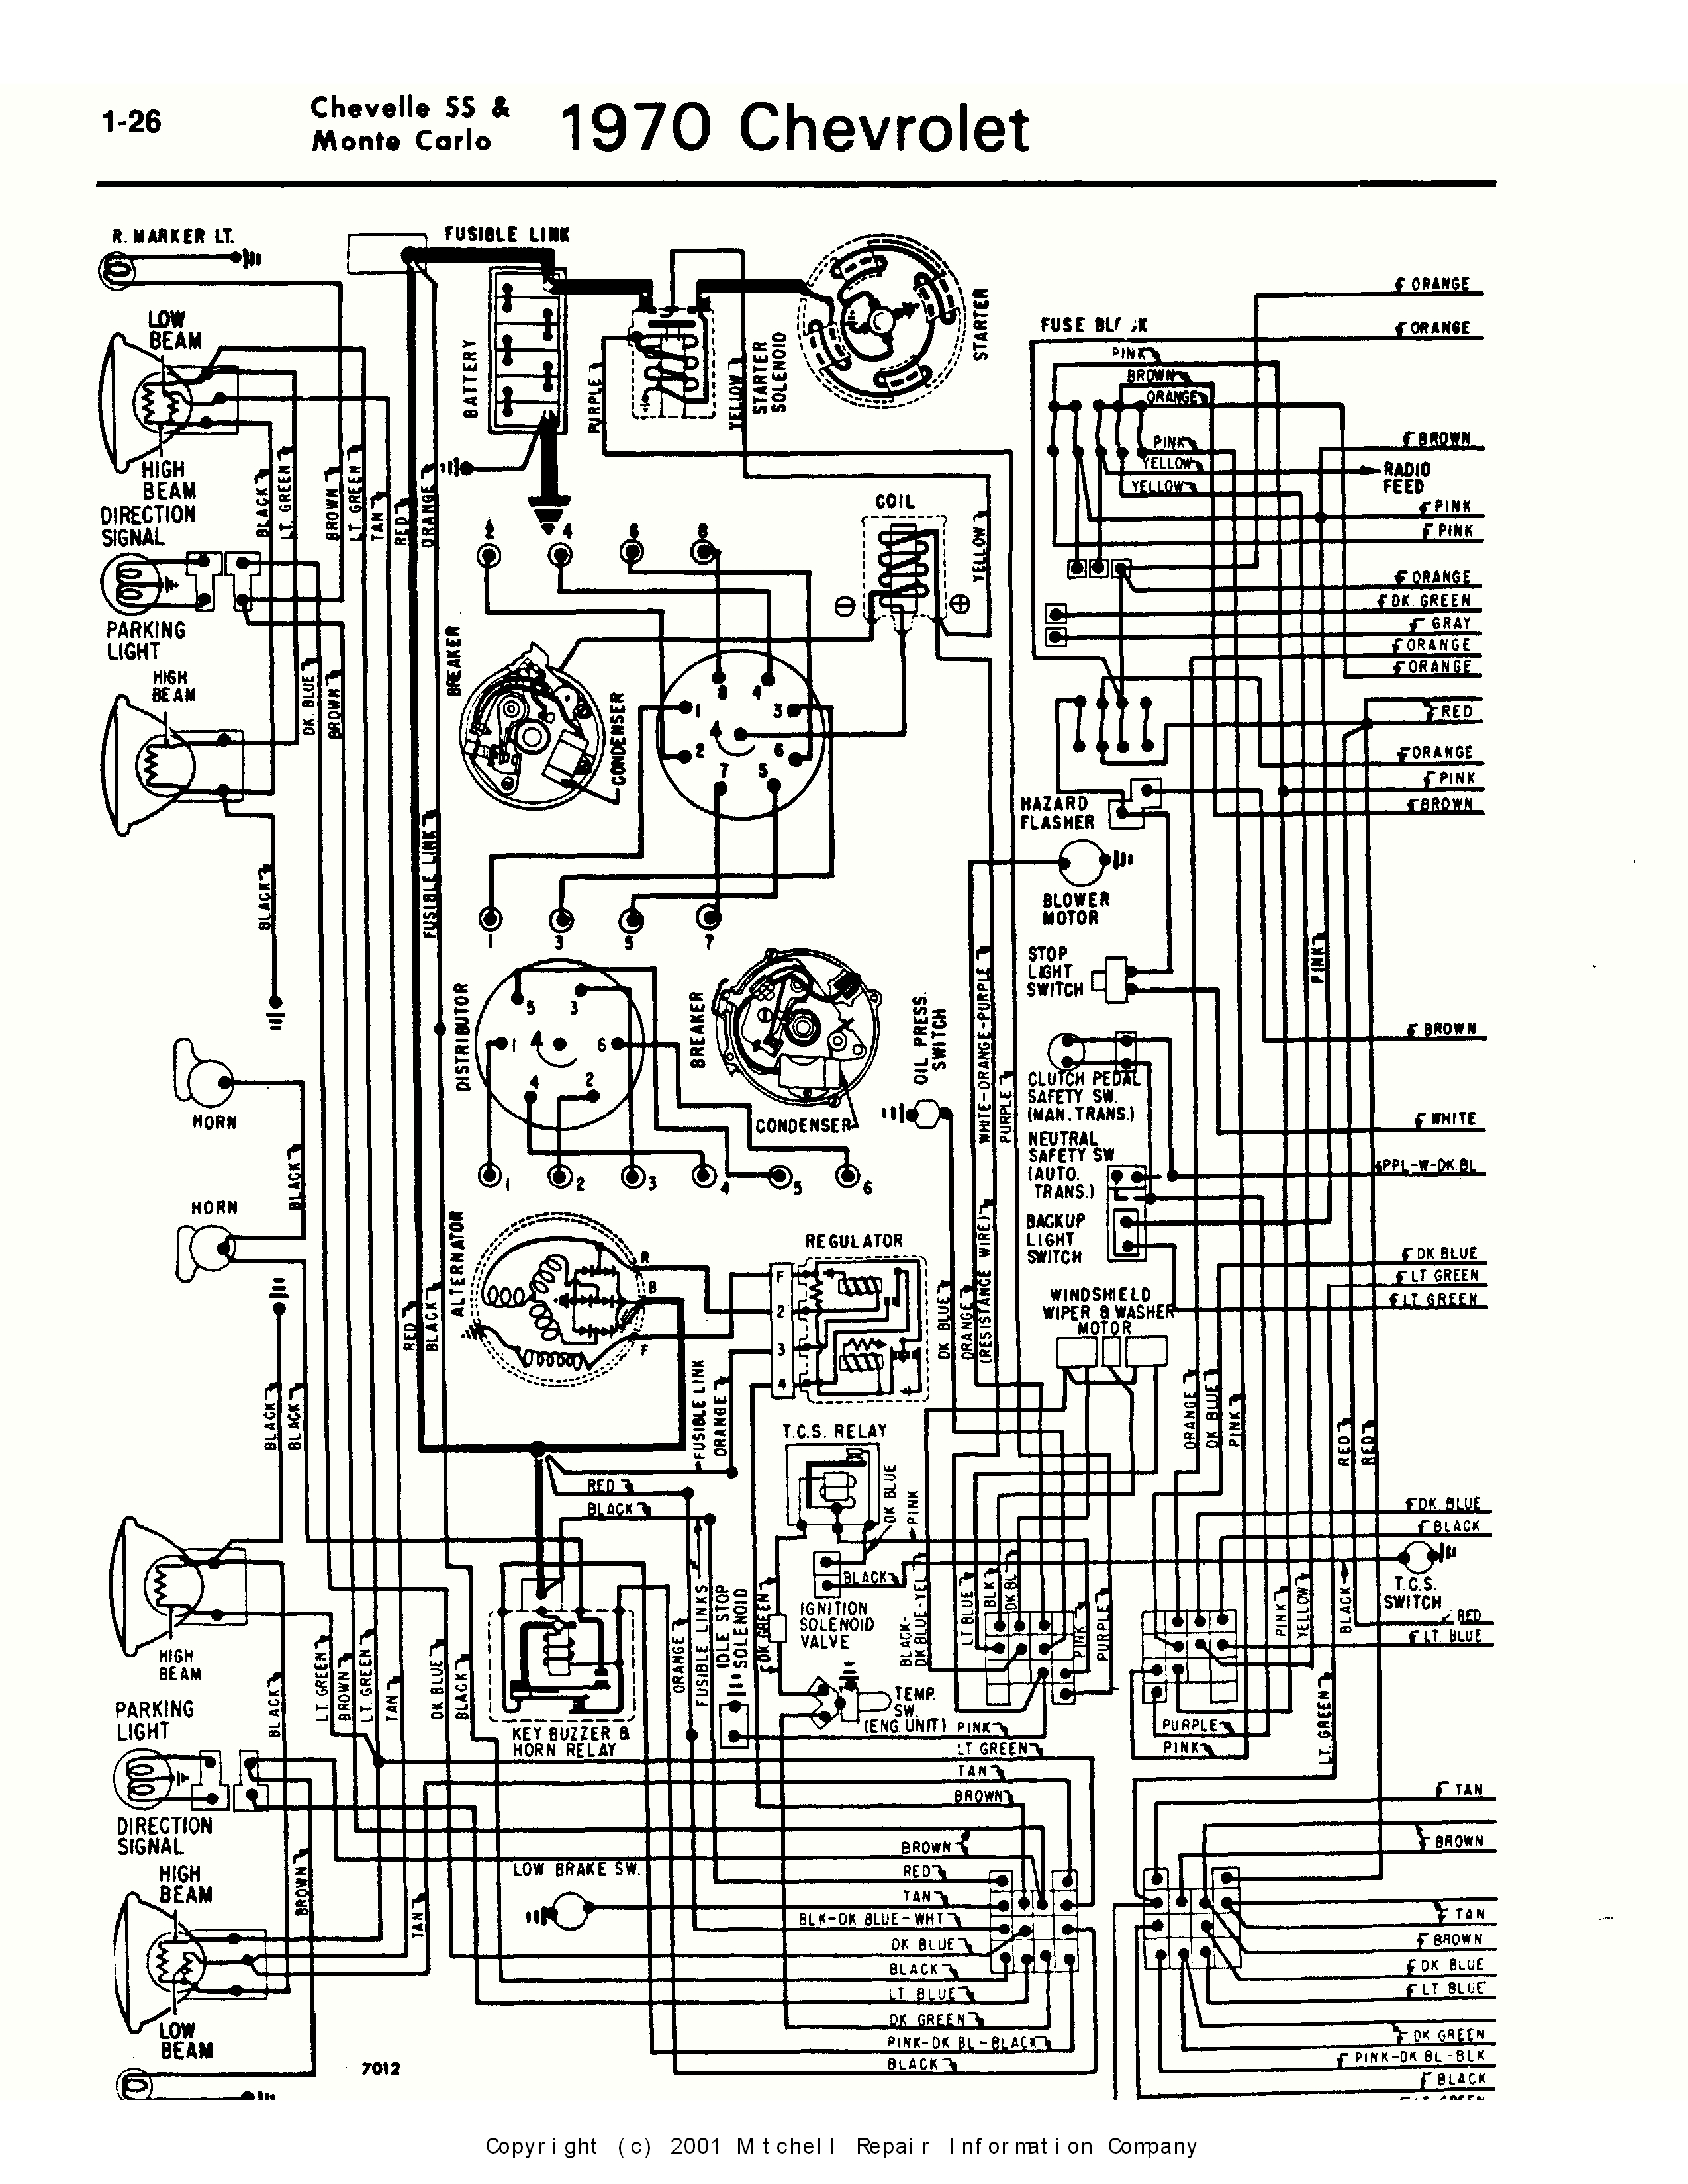 1964 Cadillac Wiring Diagram from www.wiring-wizard.com